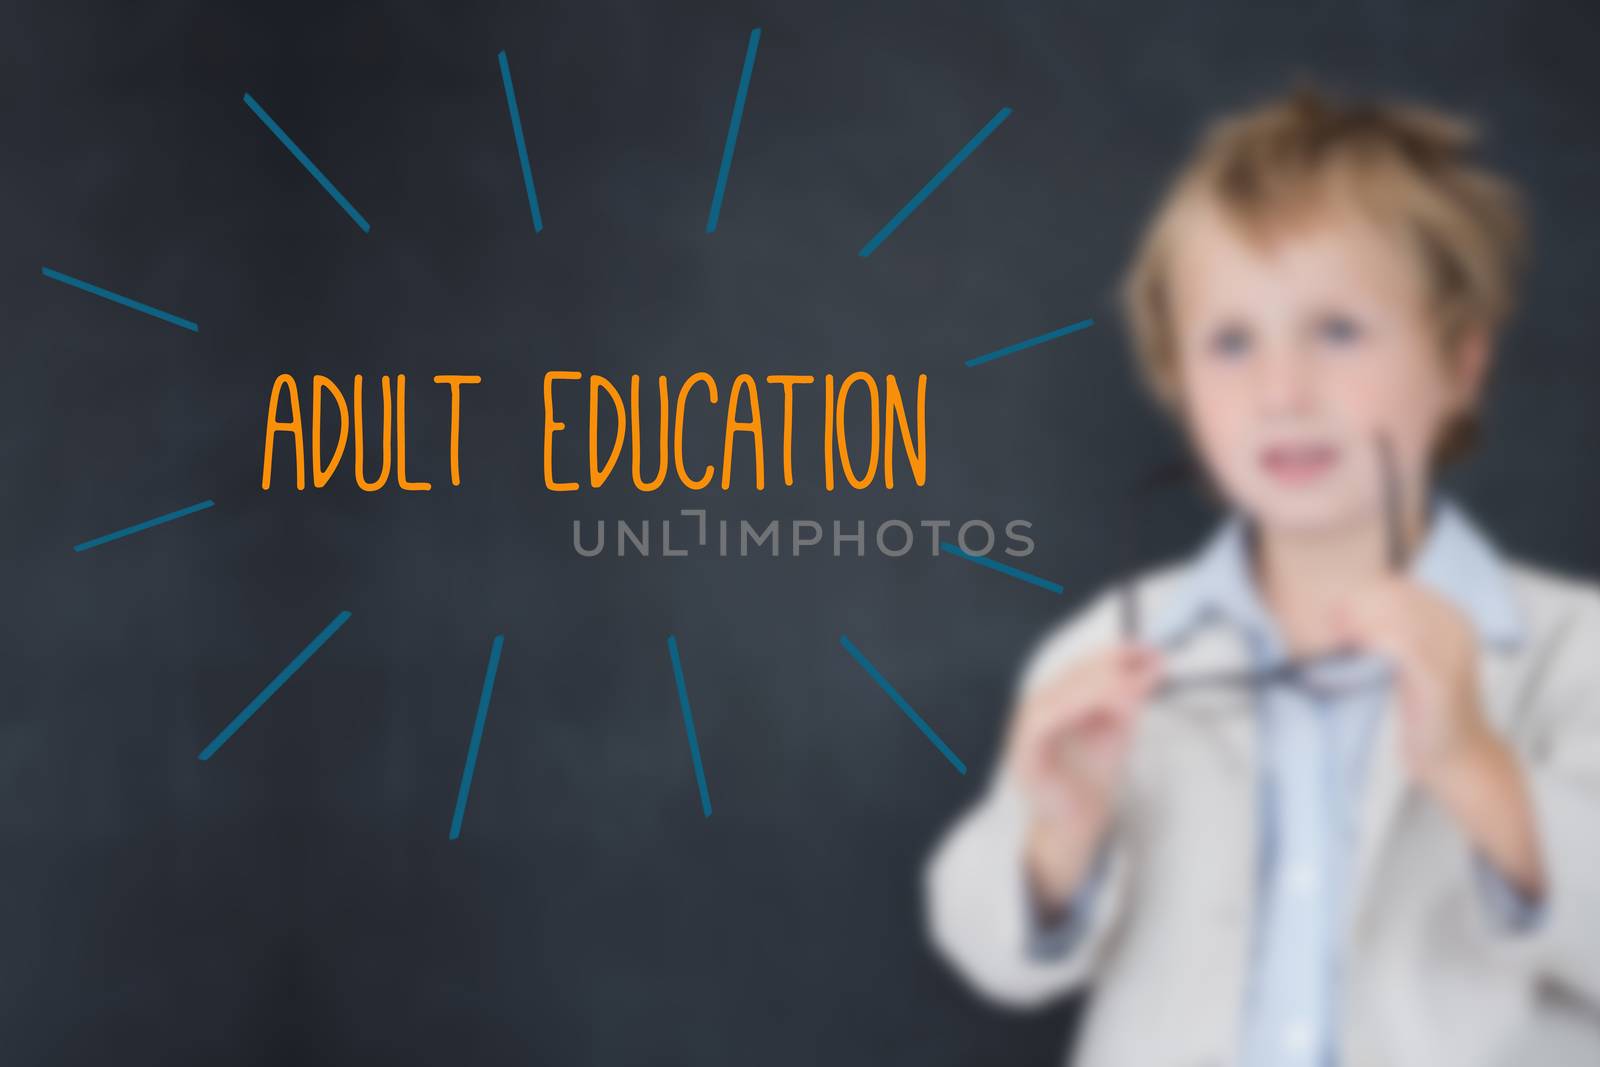 Adult education against schoolboy and blackboard by Wavebreakmedia